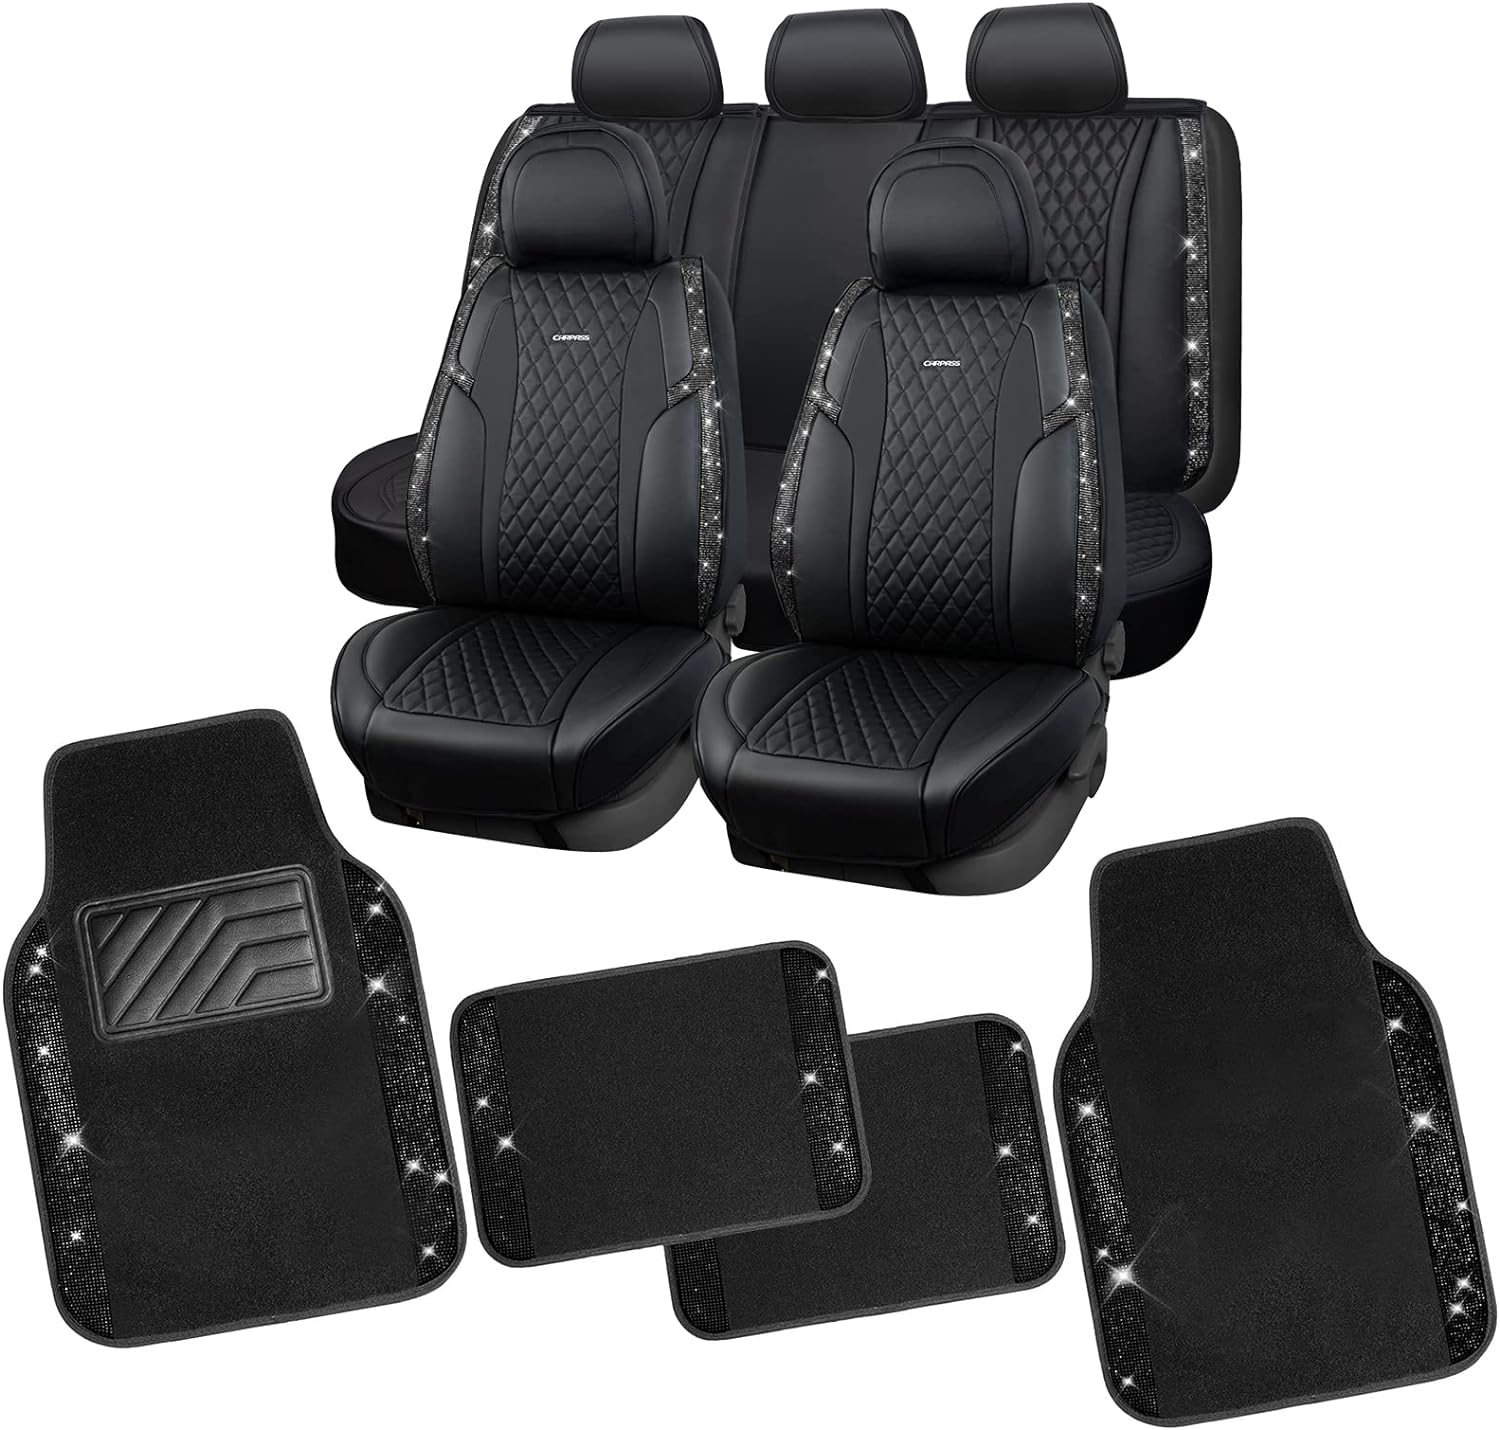 CAR PASS Bling Rhinestones Diamond Car Floor Mats & Nappa Leather Seat Covers Universal for Automotive SUV,Sedan Waterproof Heavy-Duty Anti-Slip